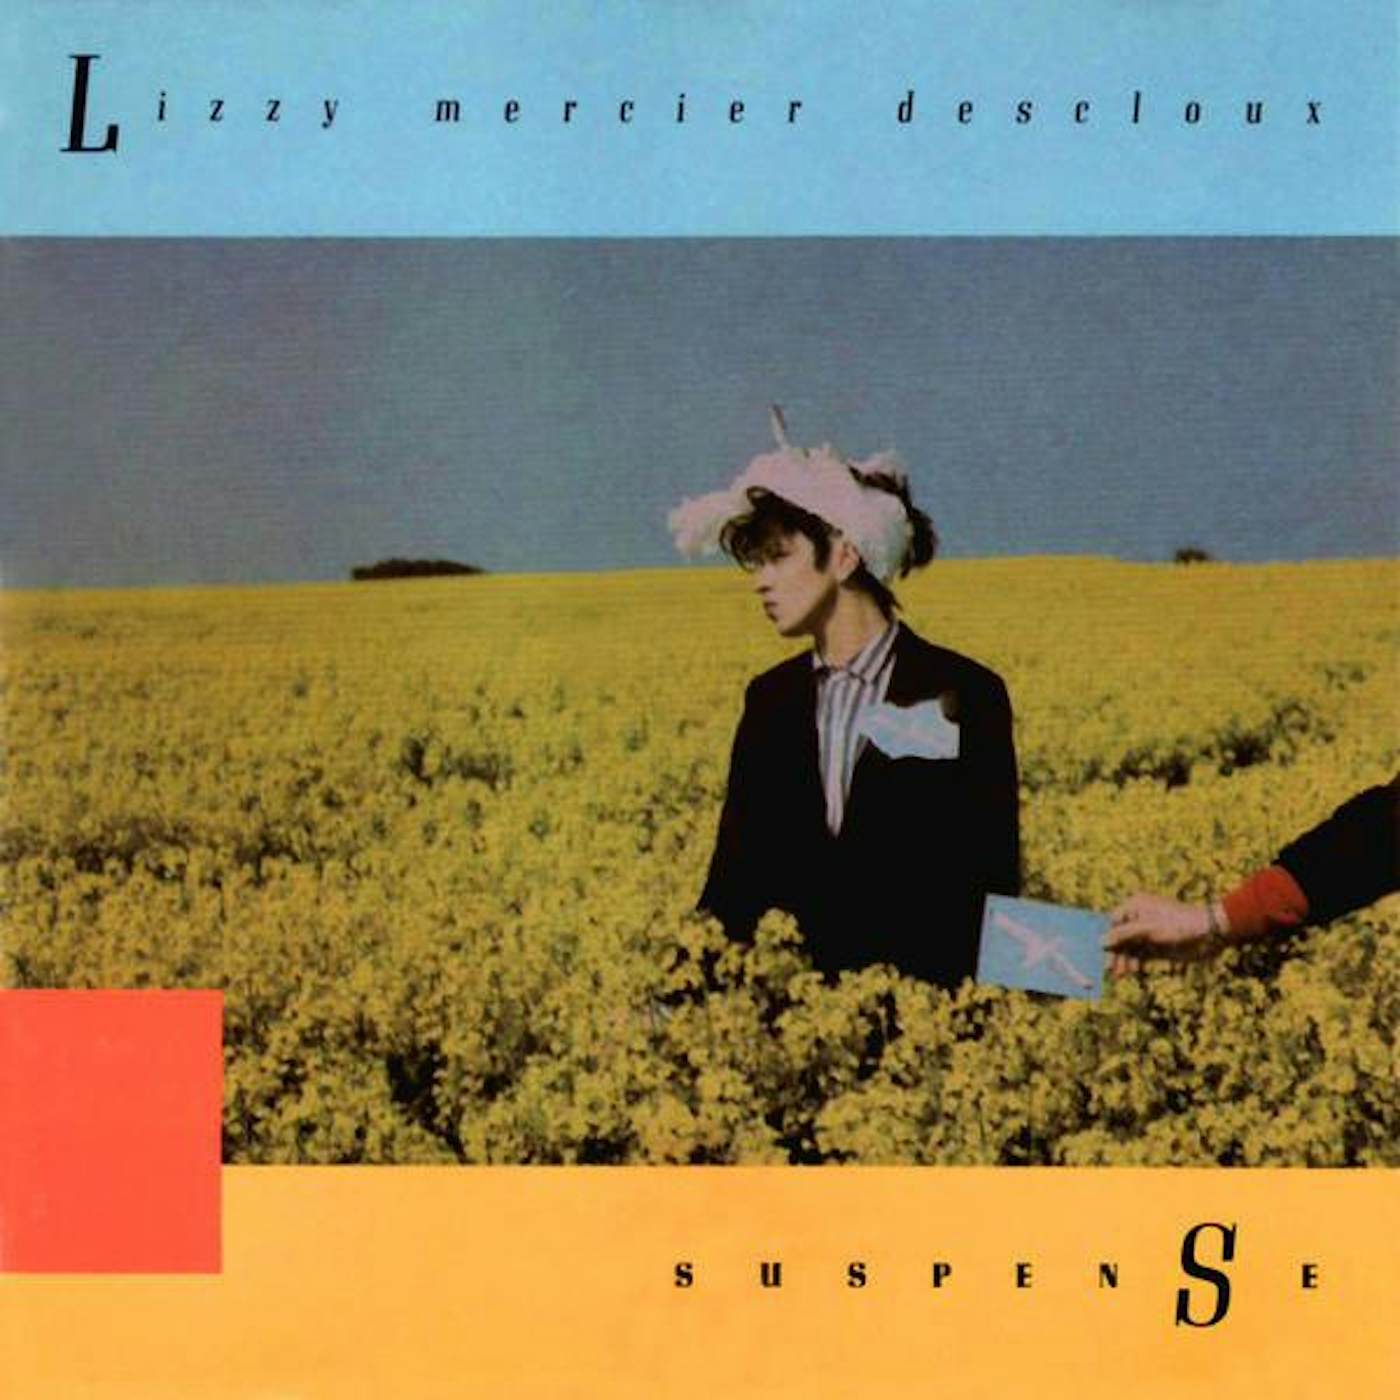 Lizzy Mercier Descloux SUSPENSE Vinyl Record